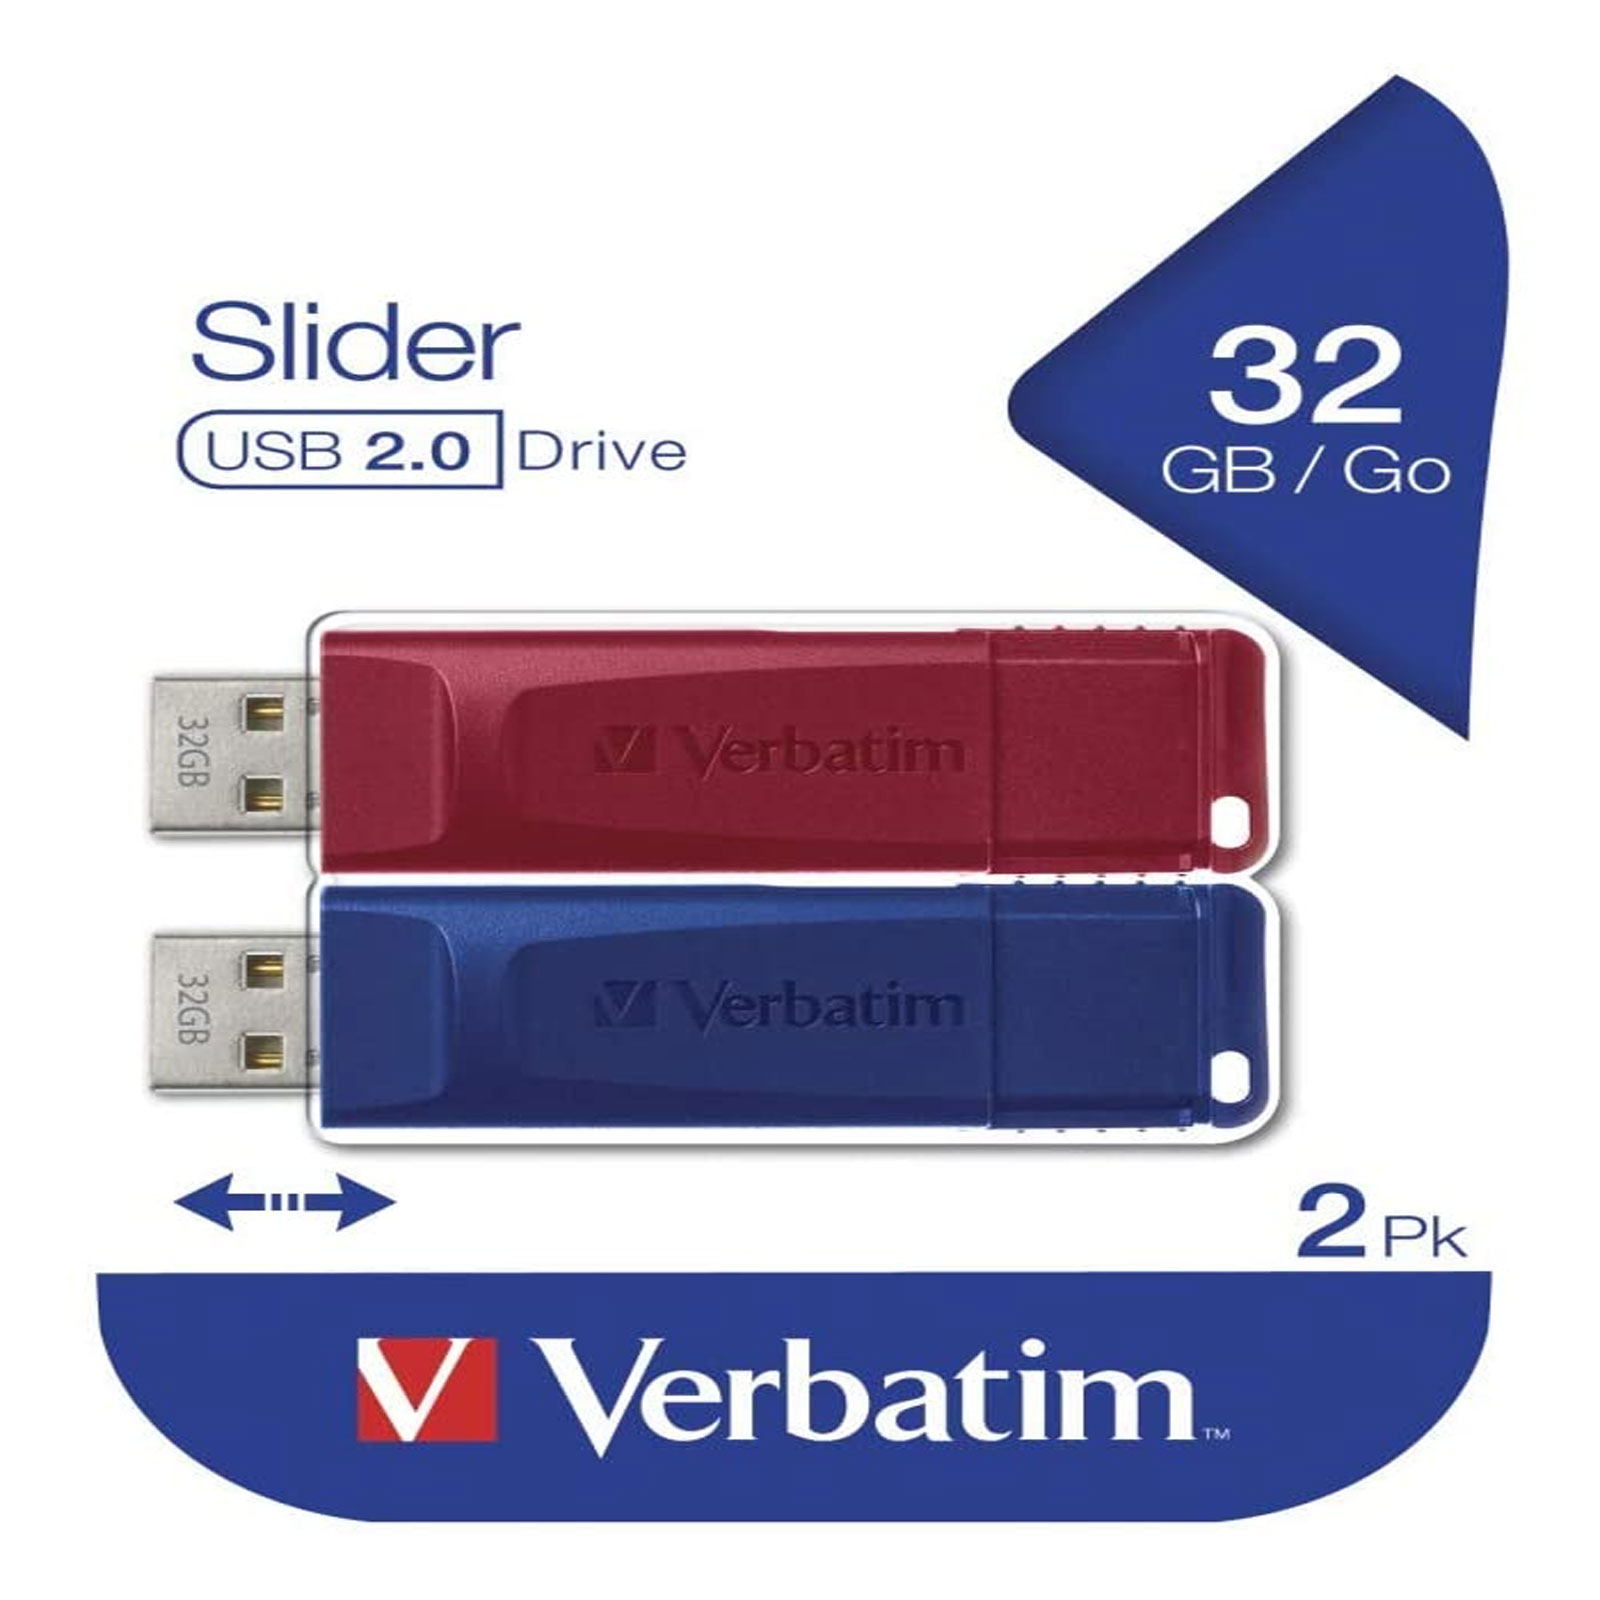 Verbatim Slider USB 2.0 32GB 2er Pack